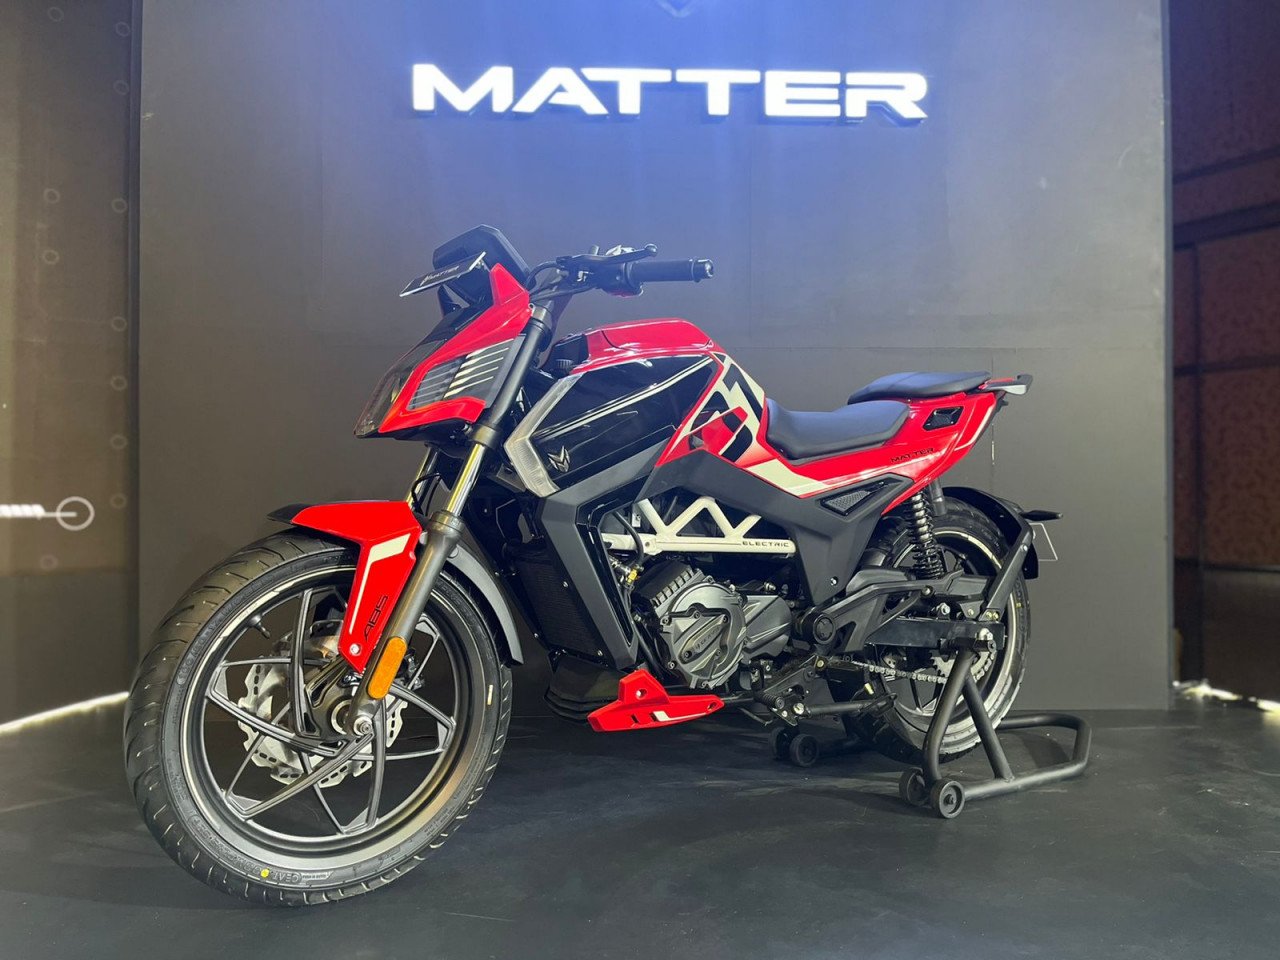 Matter E-bike